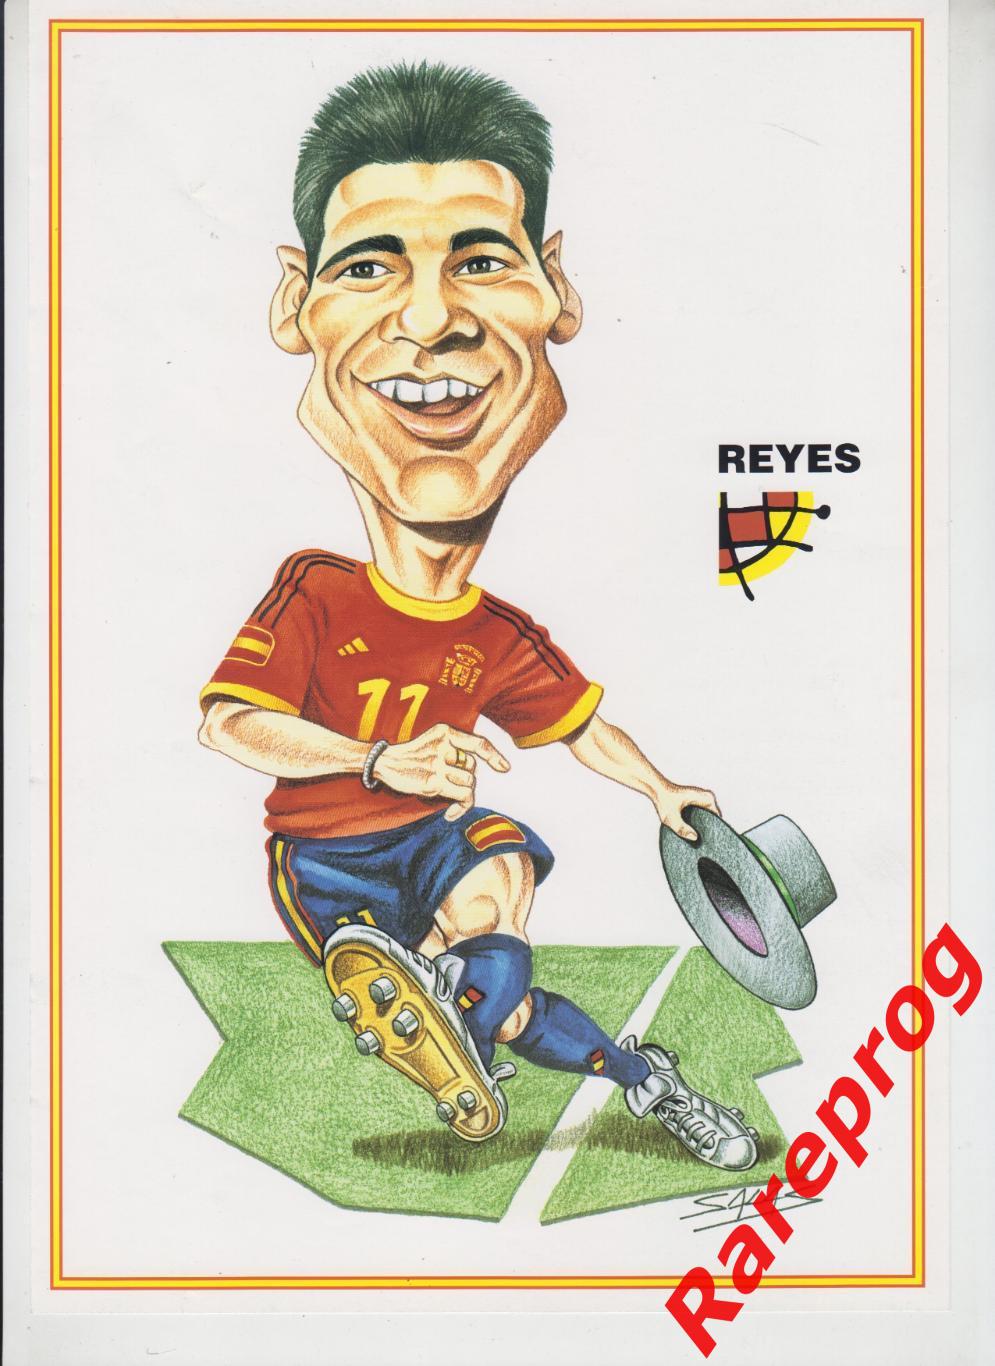 журнал Футбол RFEF Испания № 55 сентябрь 2003 - постер Reyes 1